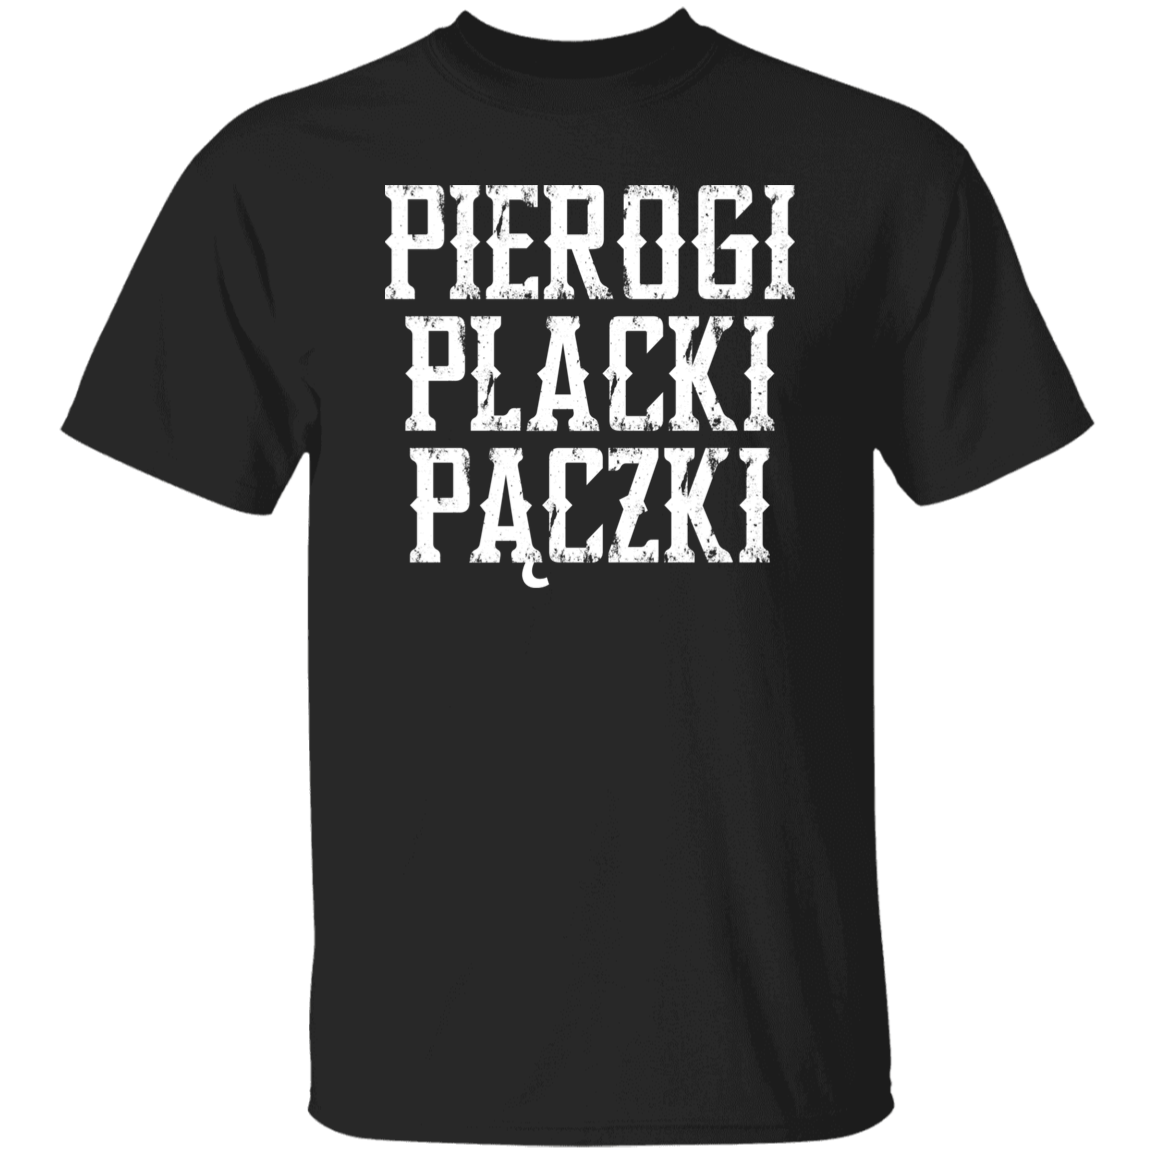 Pierogi Placzki Paczki Tongue-Twisting Tee Apparel CustomCat G500 5.3 oz. T-Shirt Black S